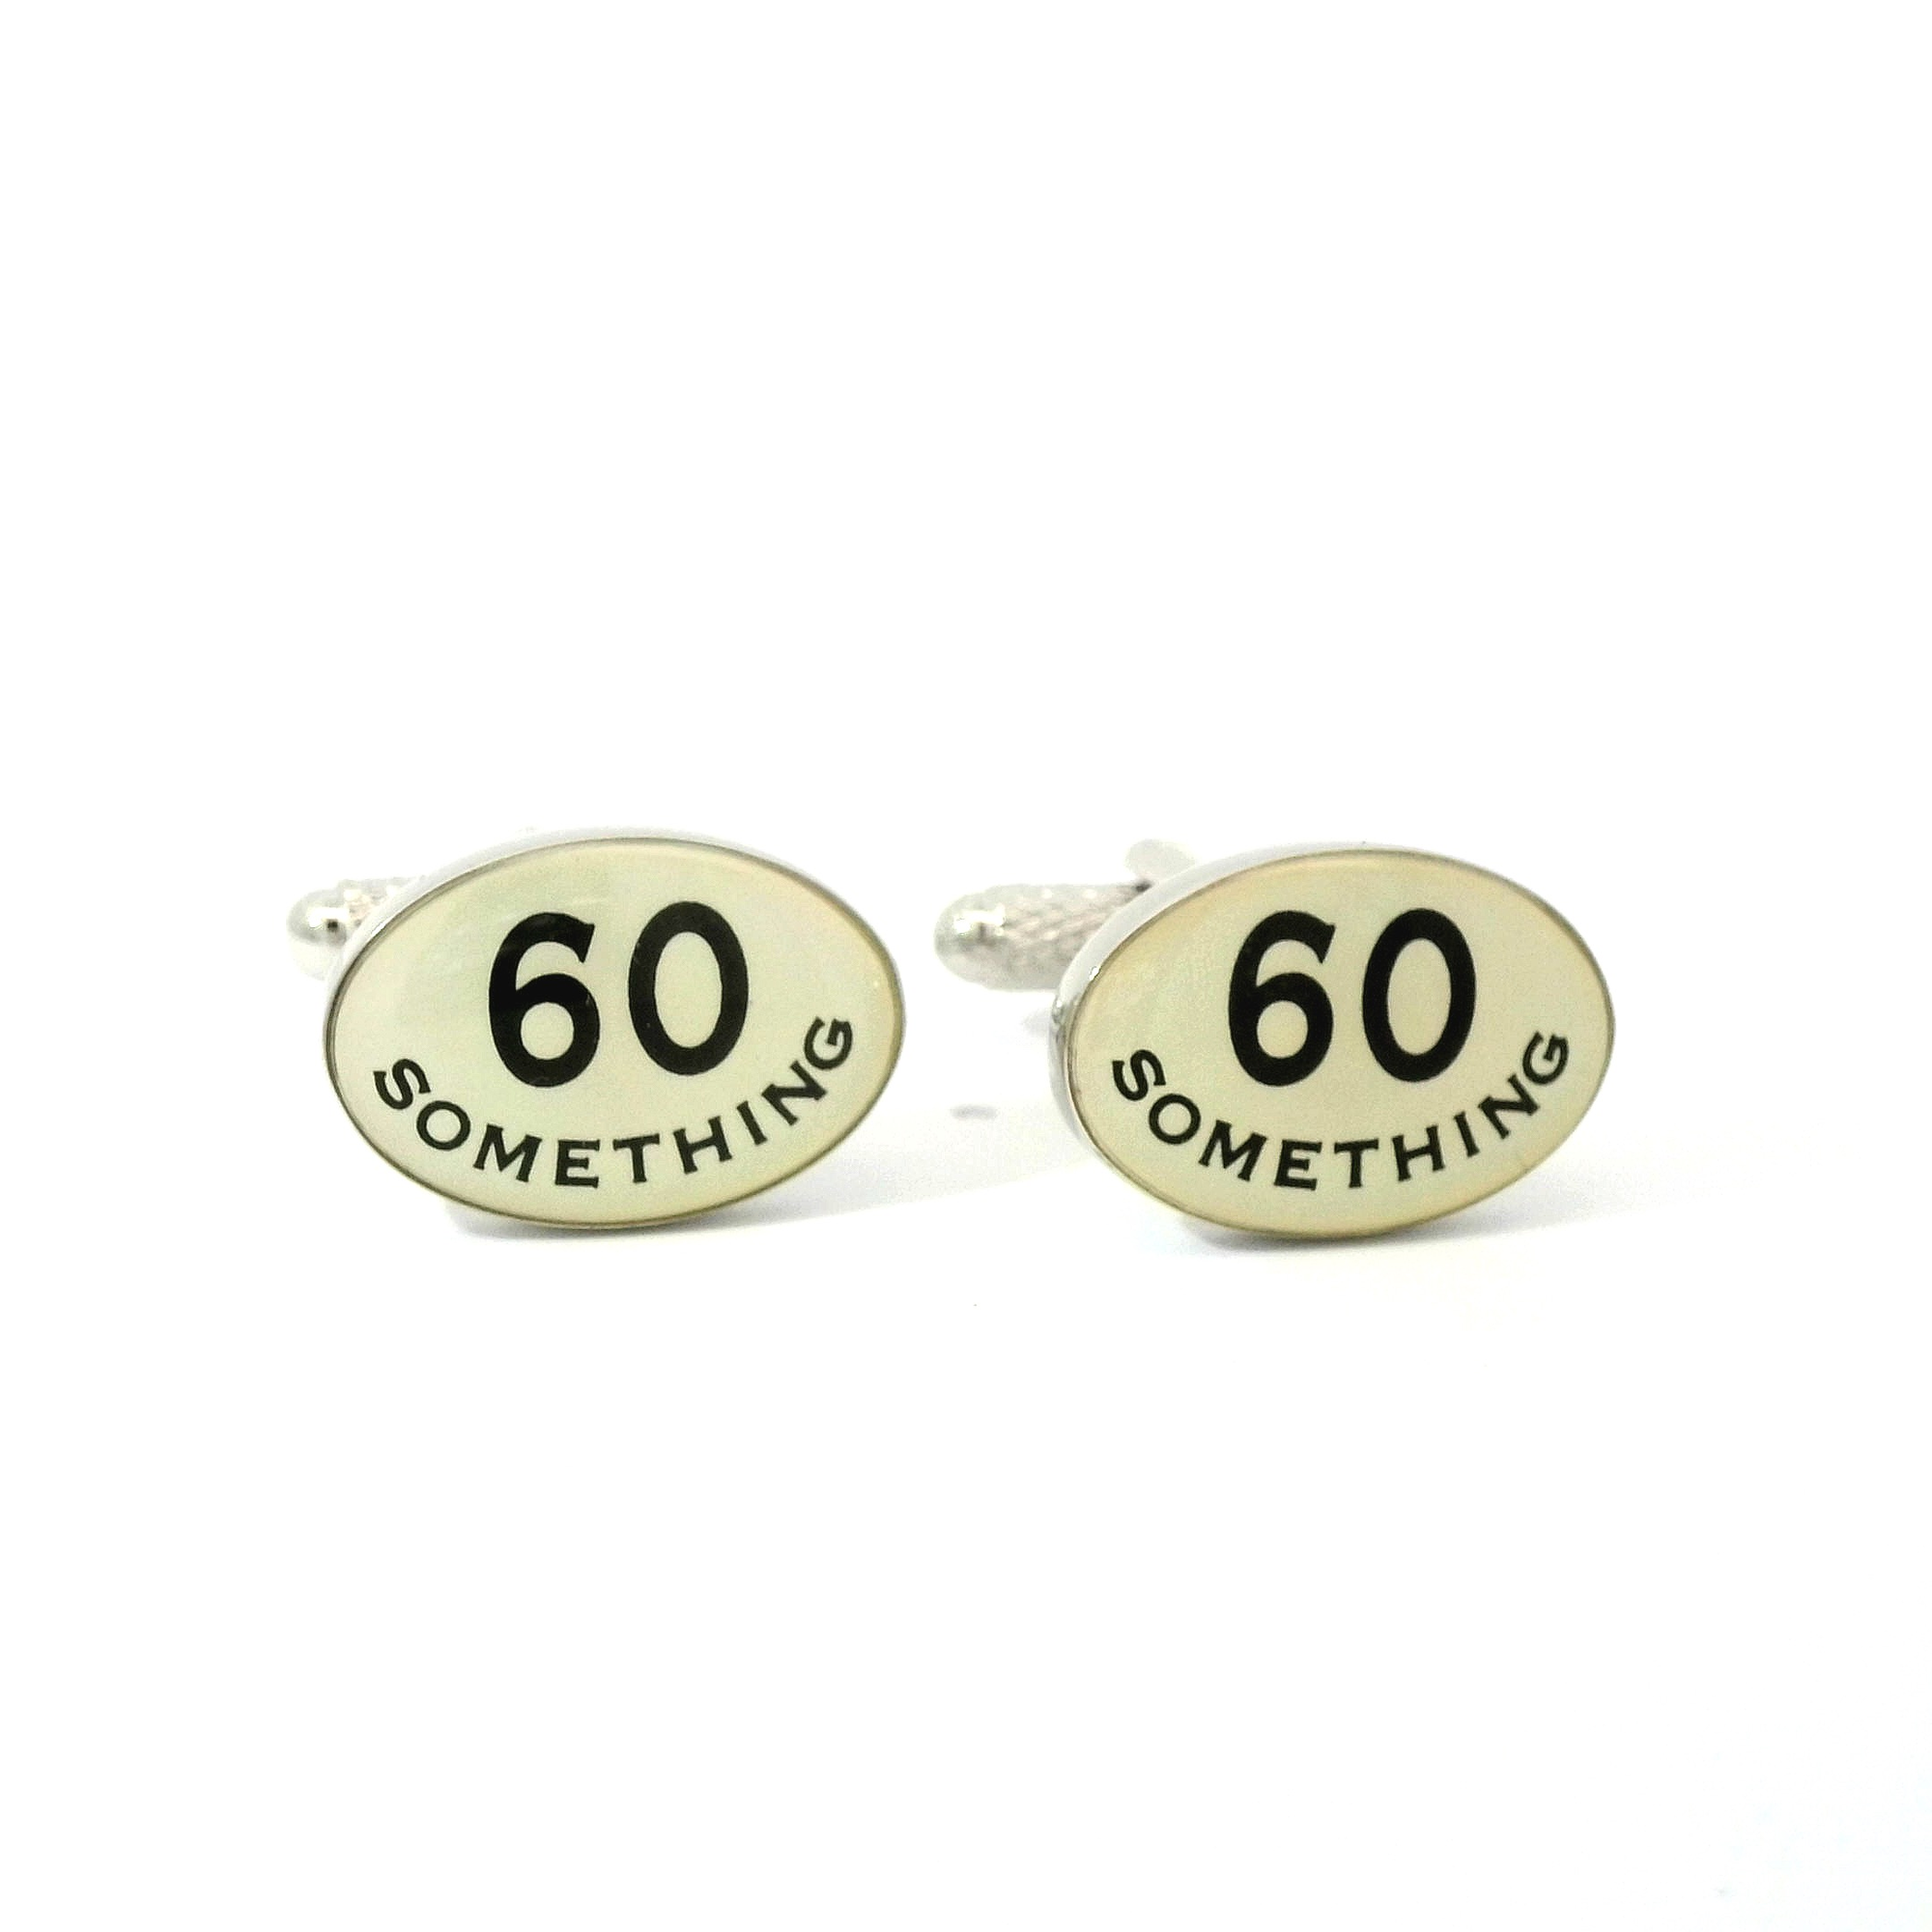 60 Something Cufflinks